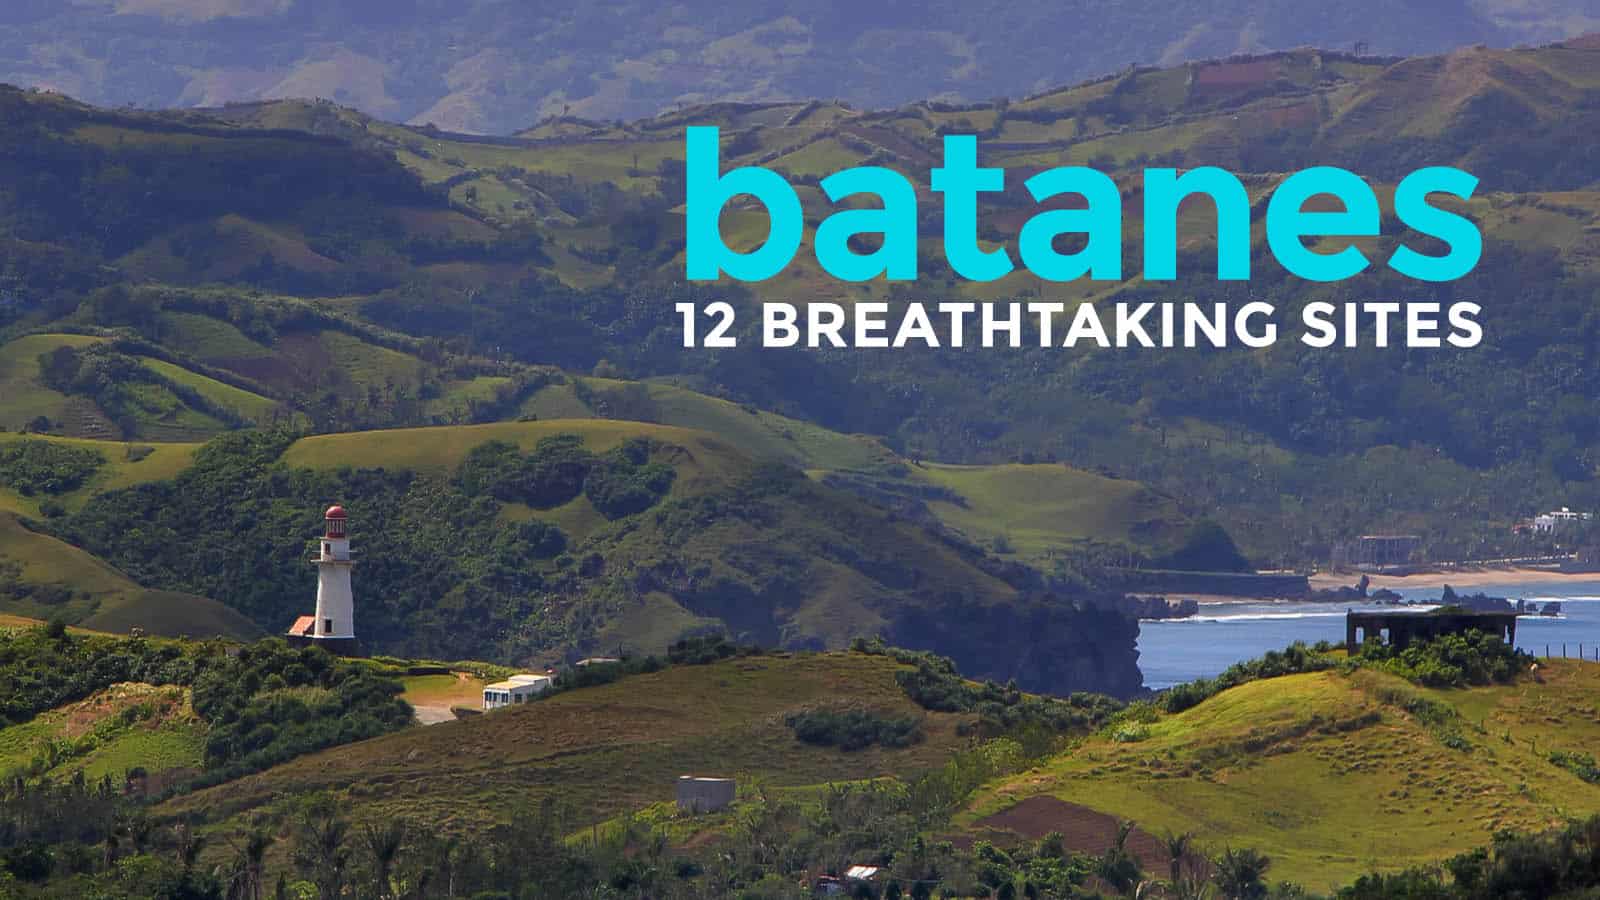 12 BREATHTAKING SITES IN BATANES, PHILIPPINES